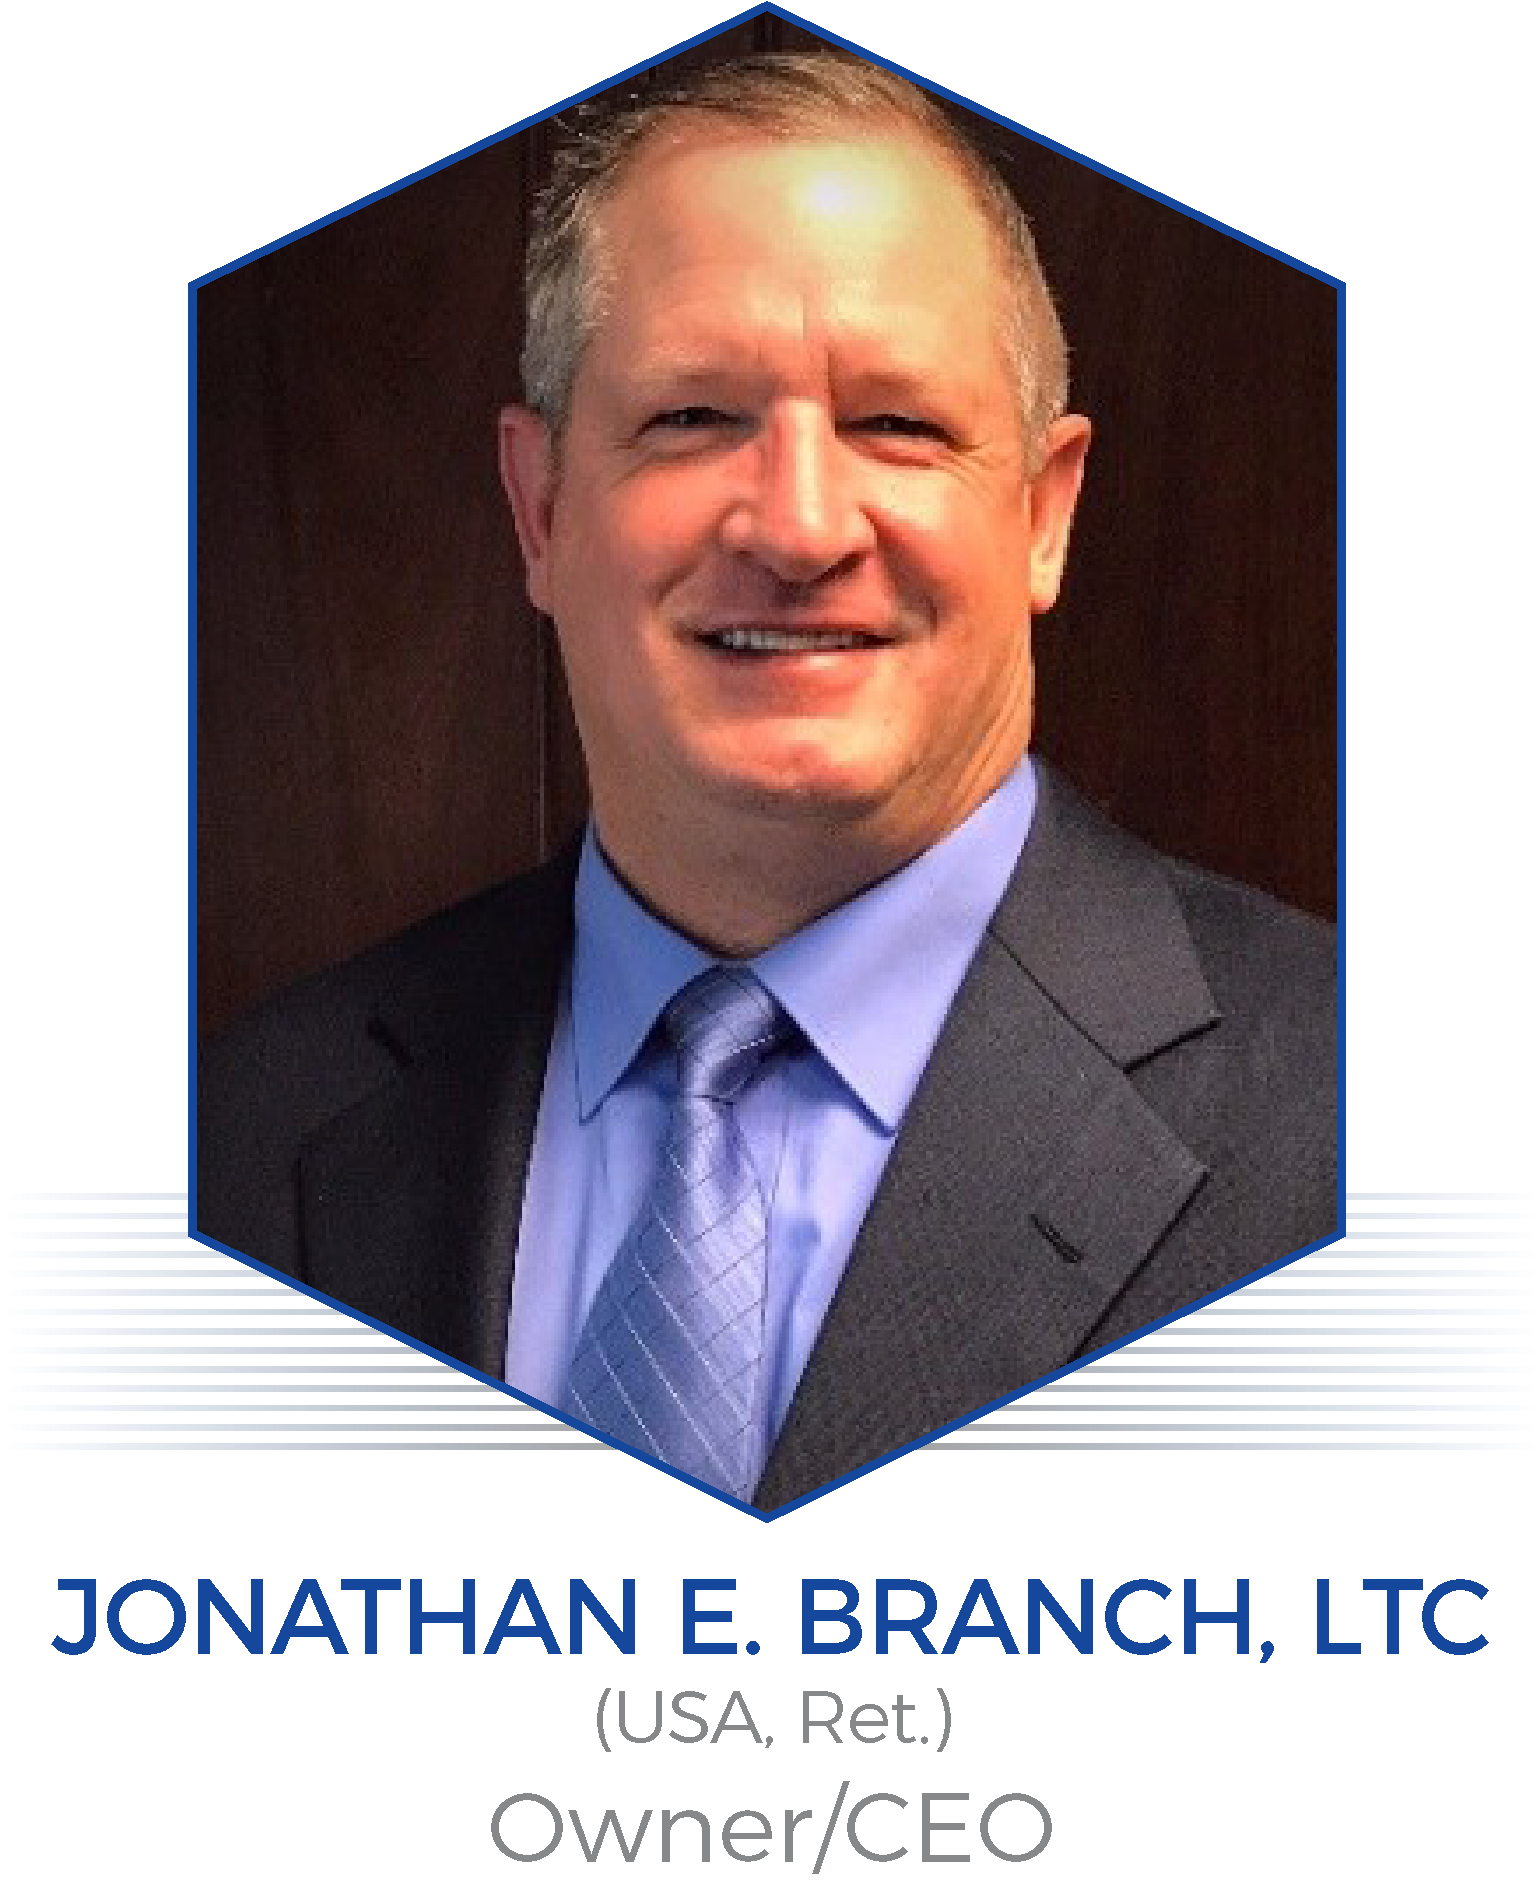 Jon Branch